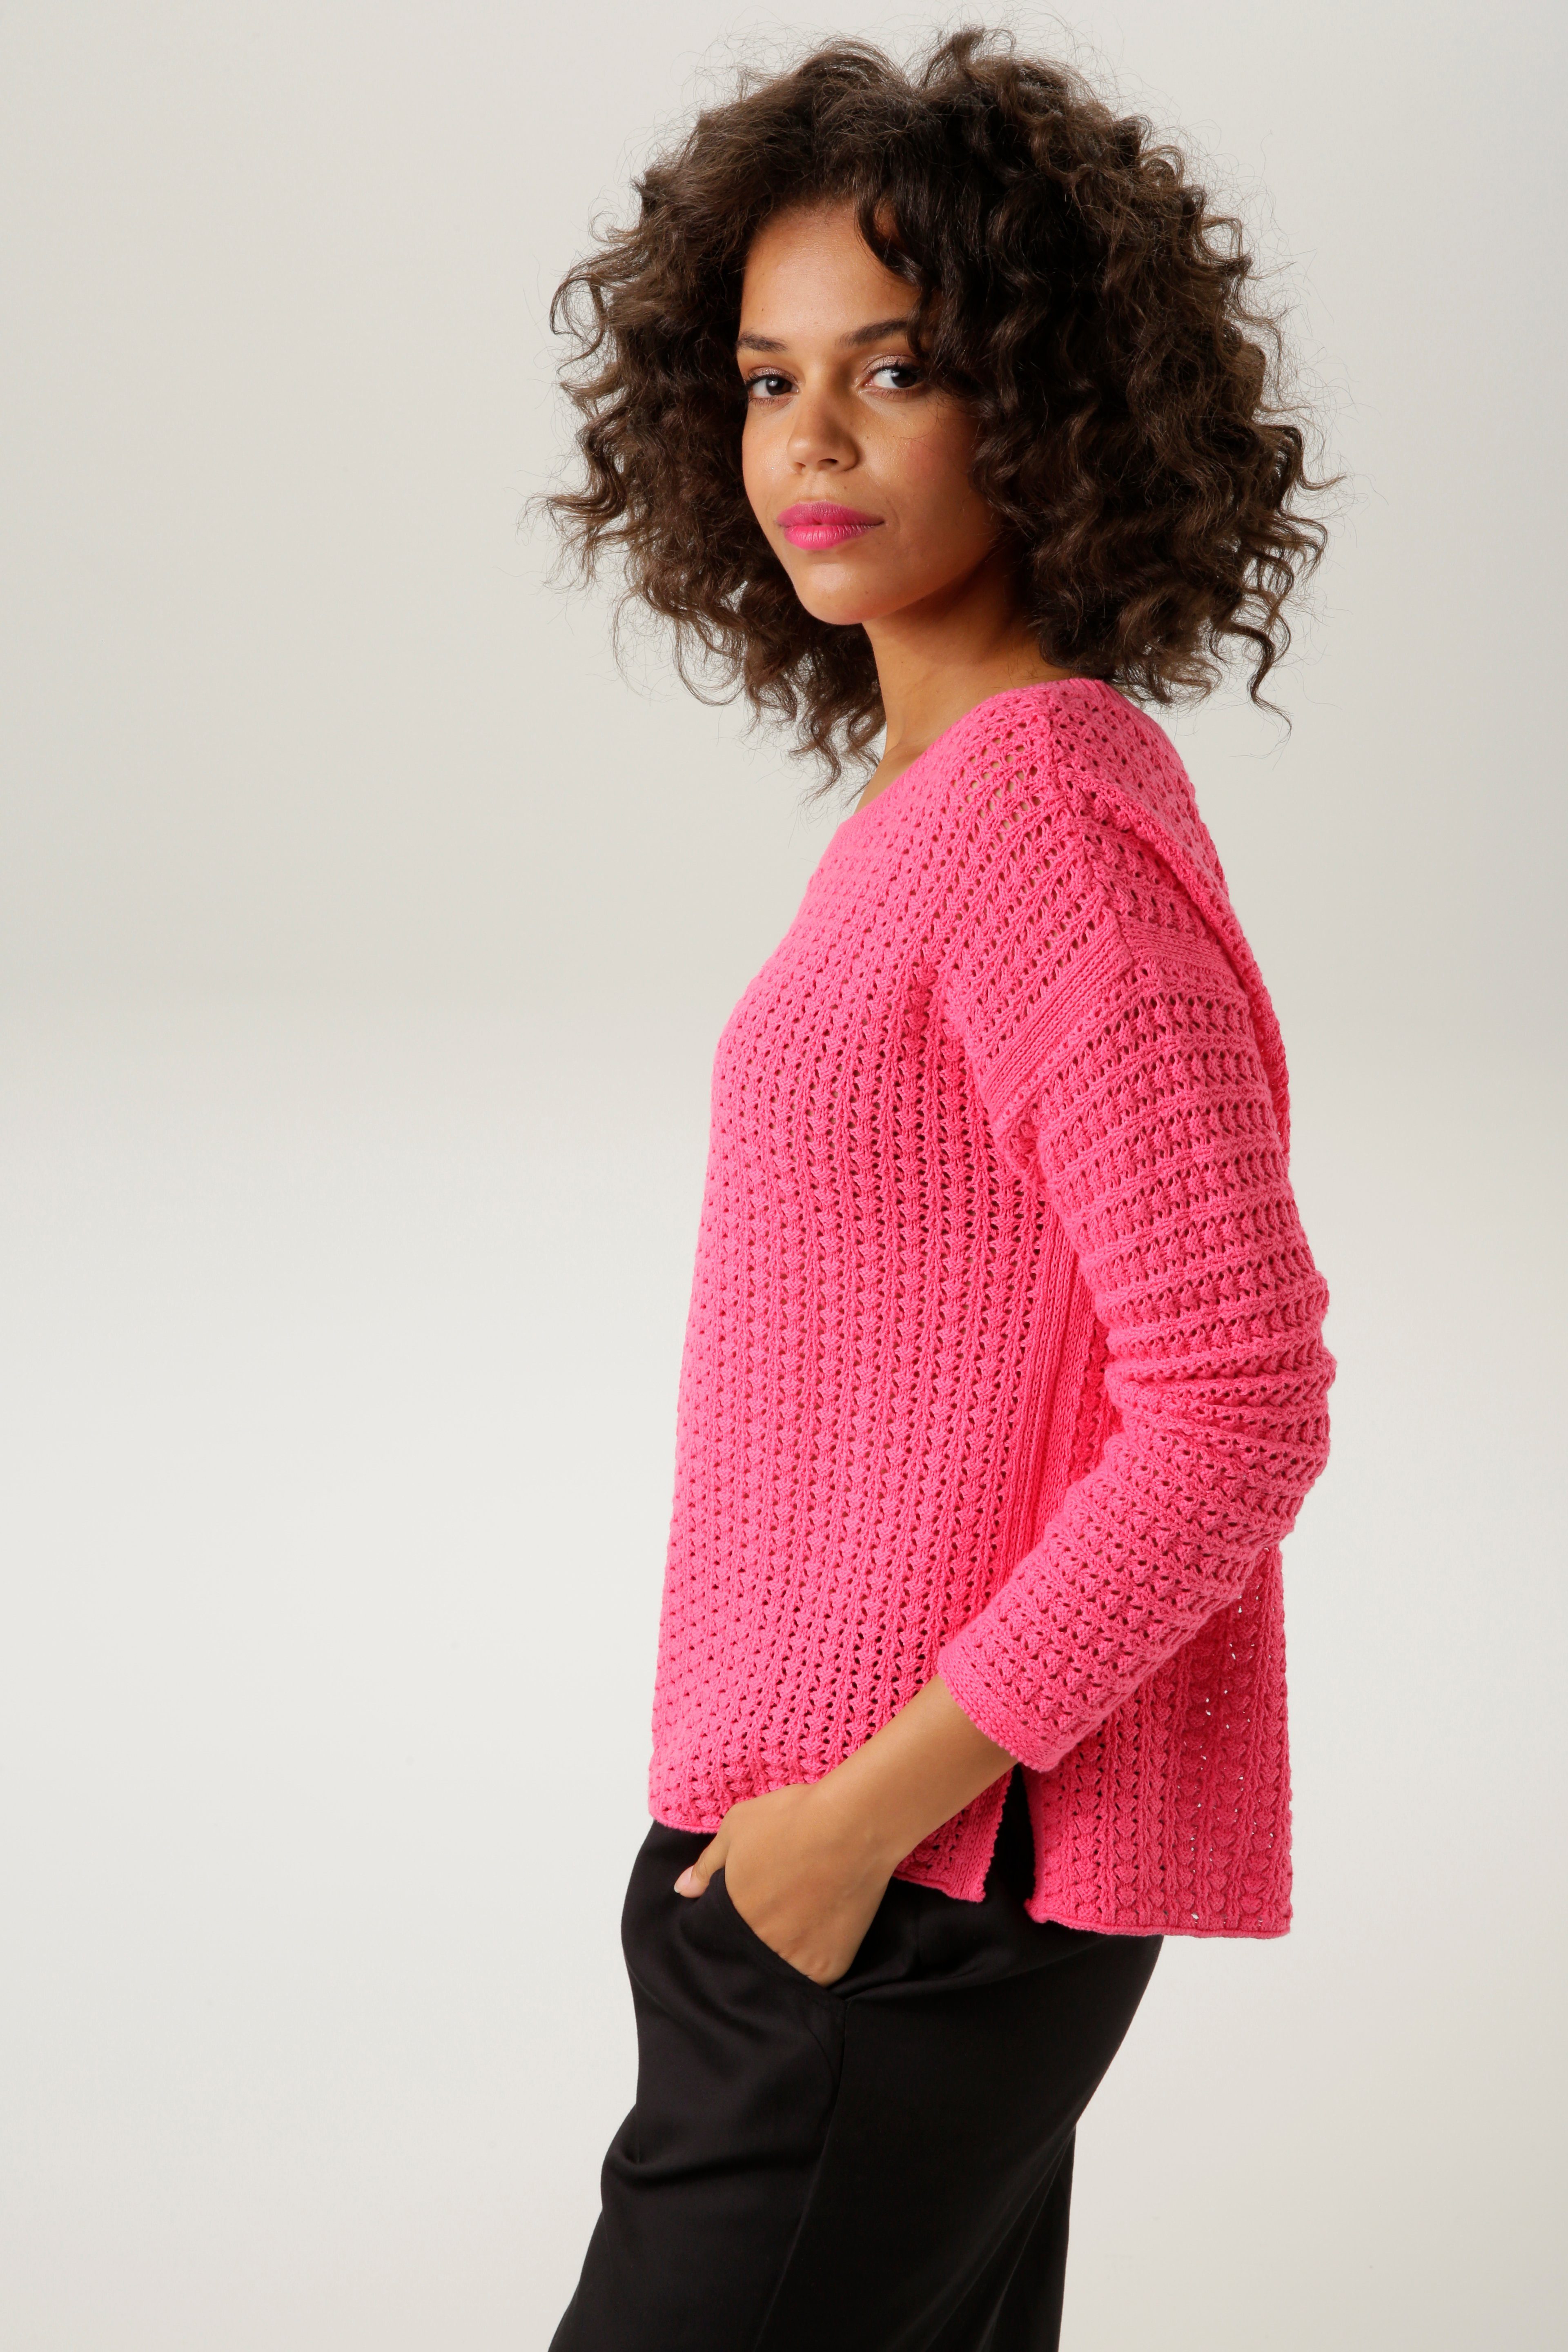 - mit Ajour-Muster CASUAL pink NEUE ausdrucksvollem Aniston KOLLEKTION Strickpullover